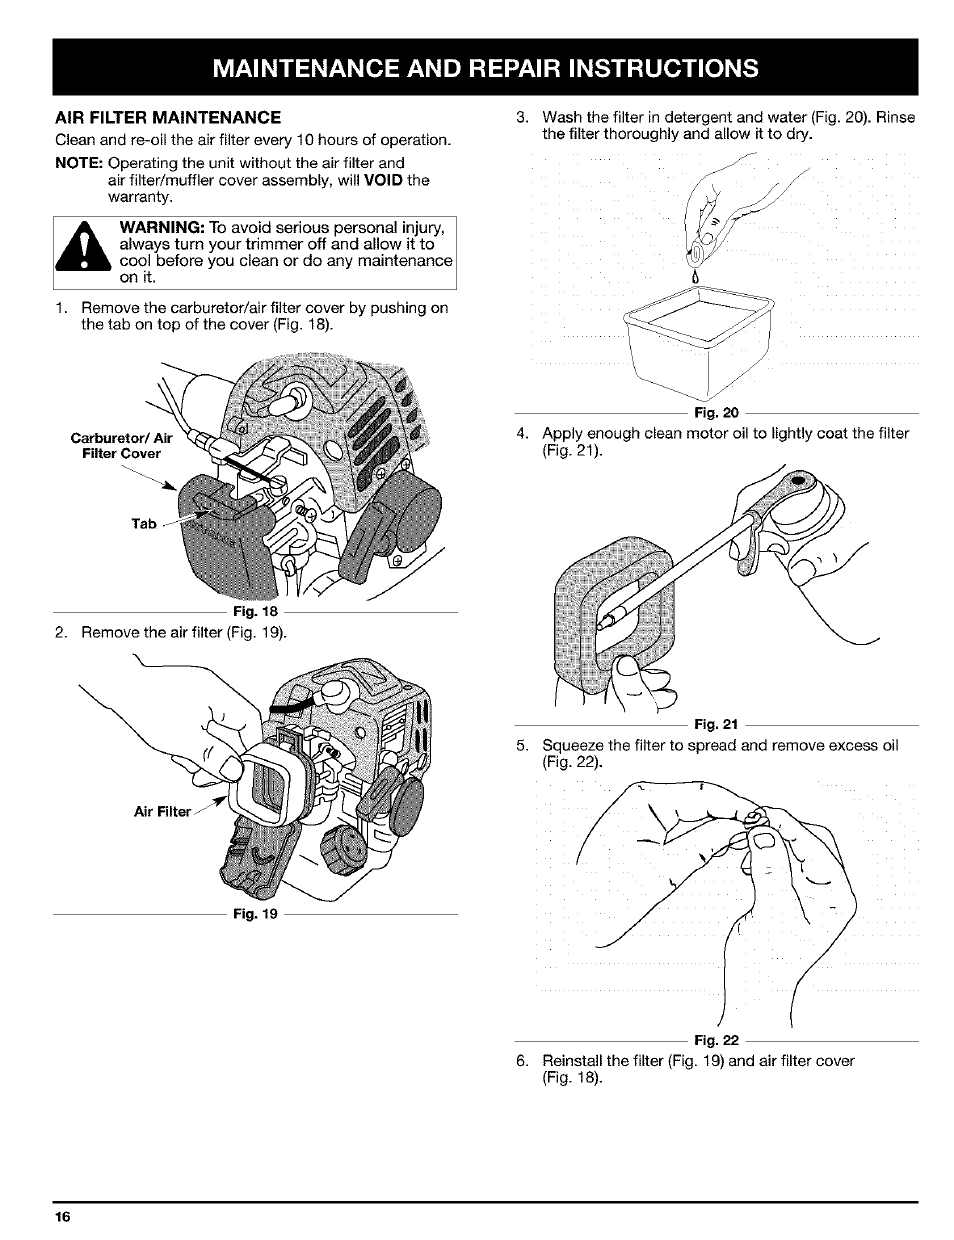 Maintenance and repair instructions | Ryobi Trimmer User Manual | Page 16 /  24 | Original mode